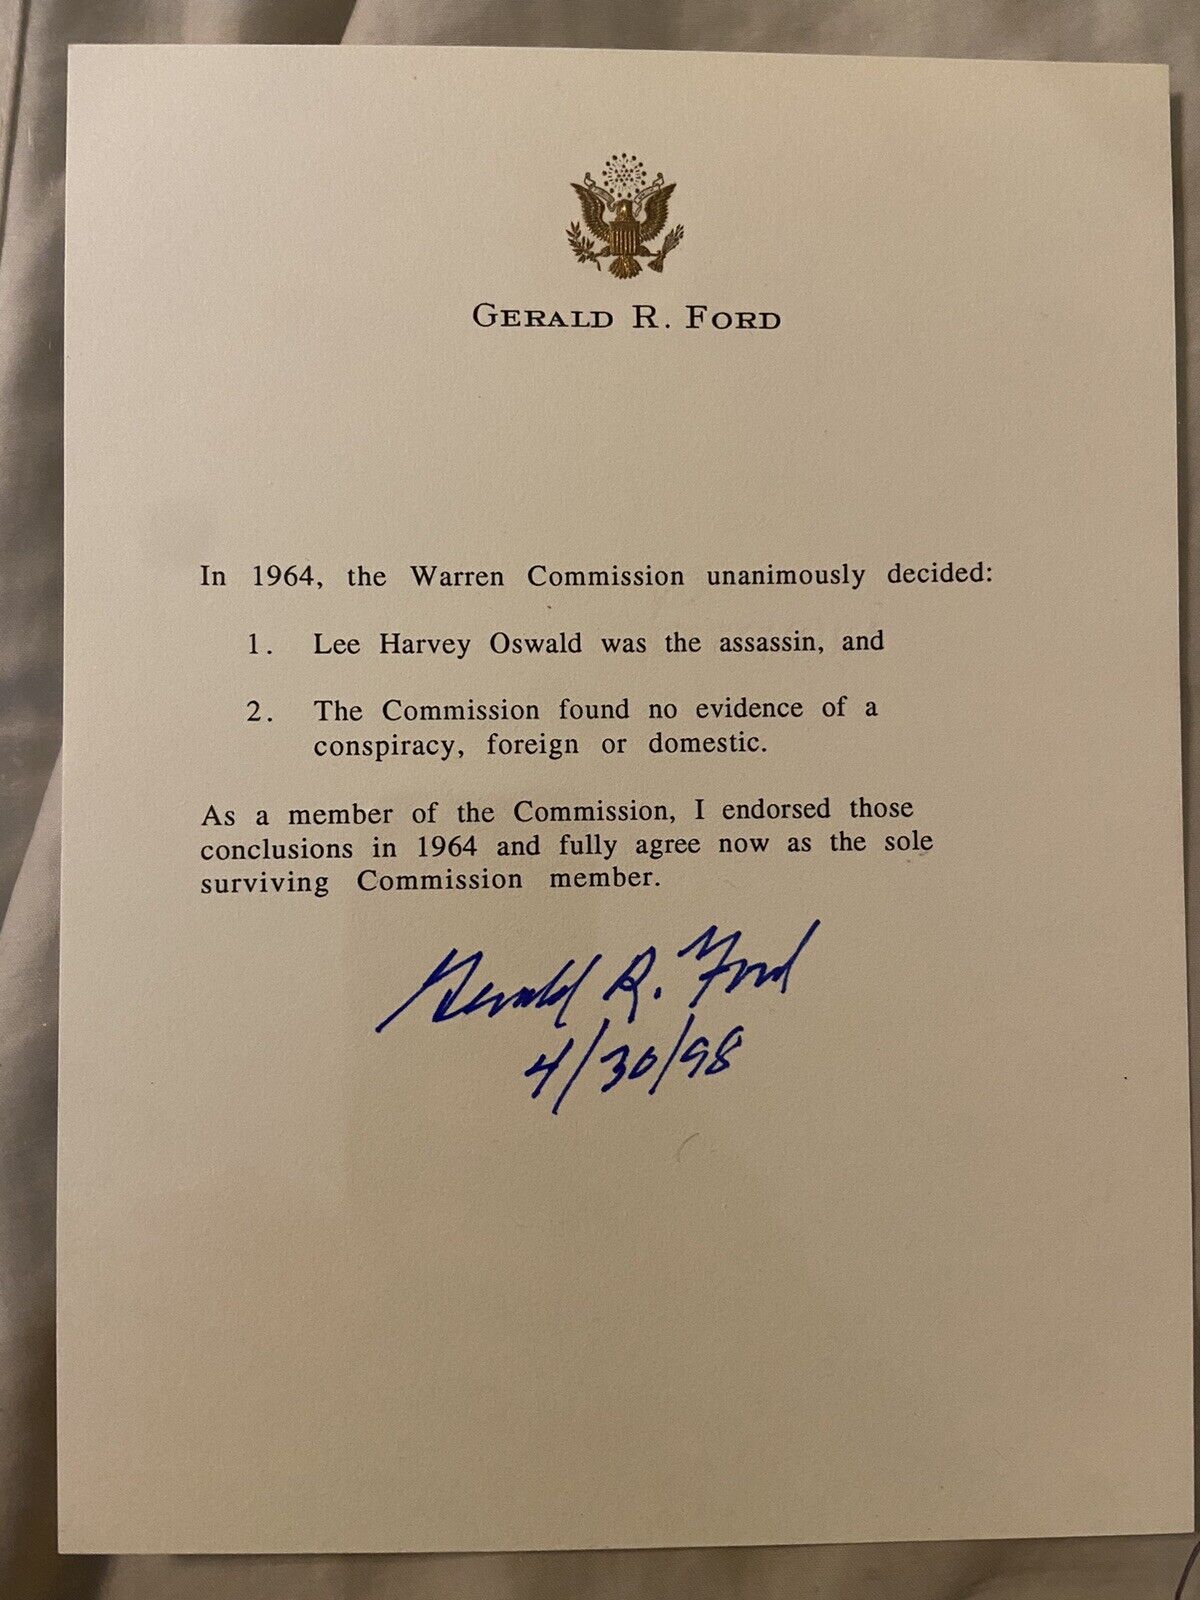 Gerald R. Ford Signed Warren Commission Statement